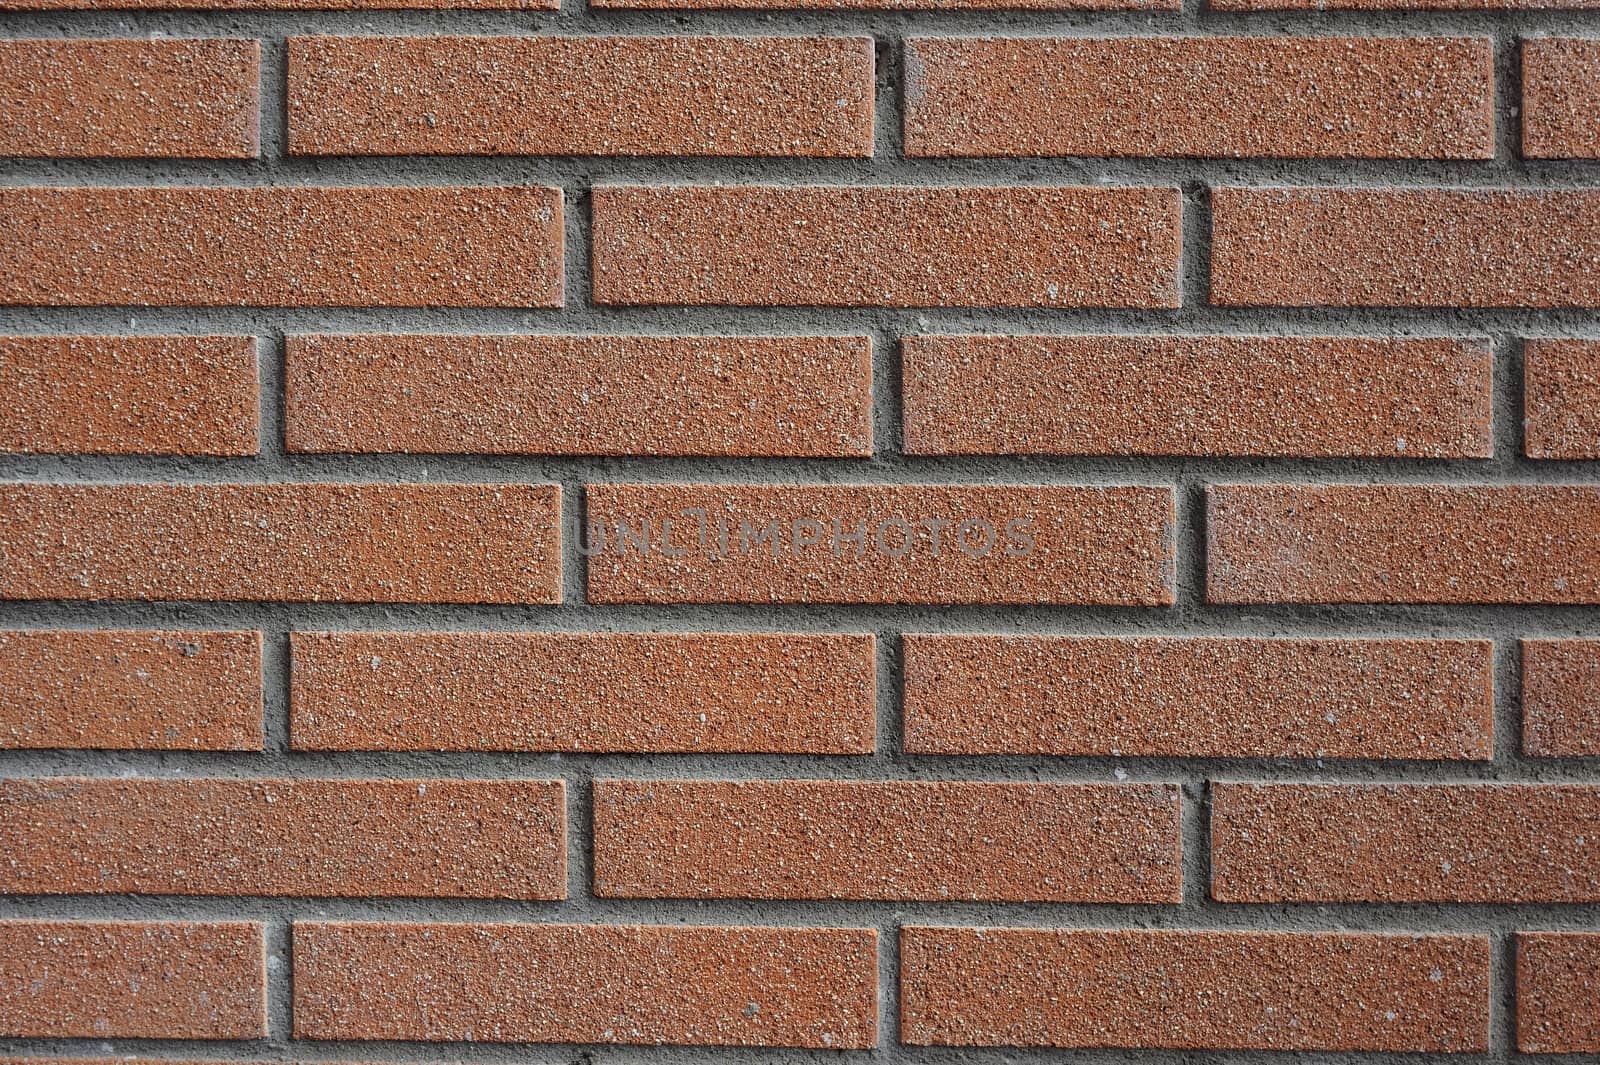 Brick wall by a40757